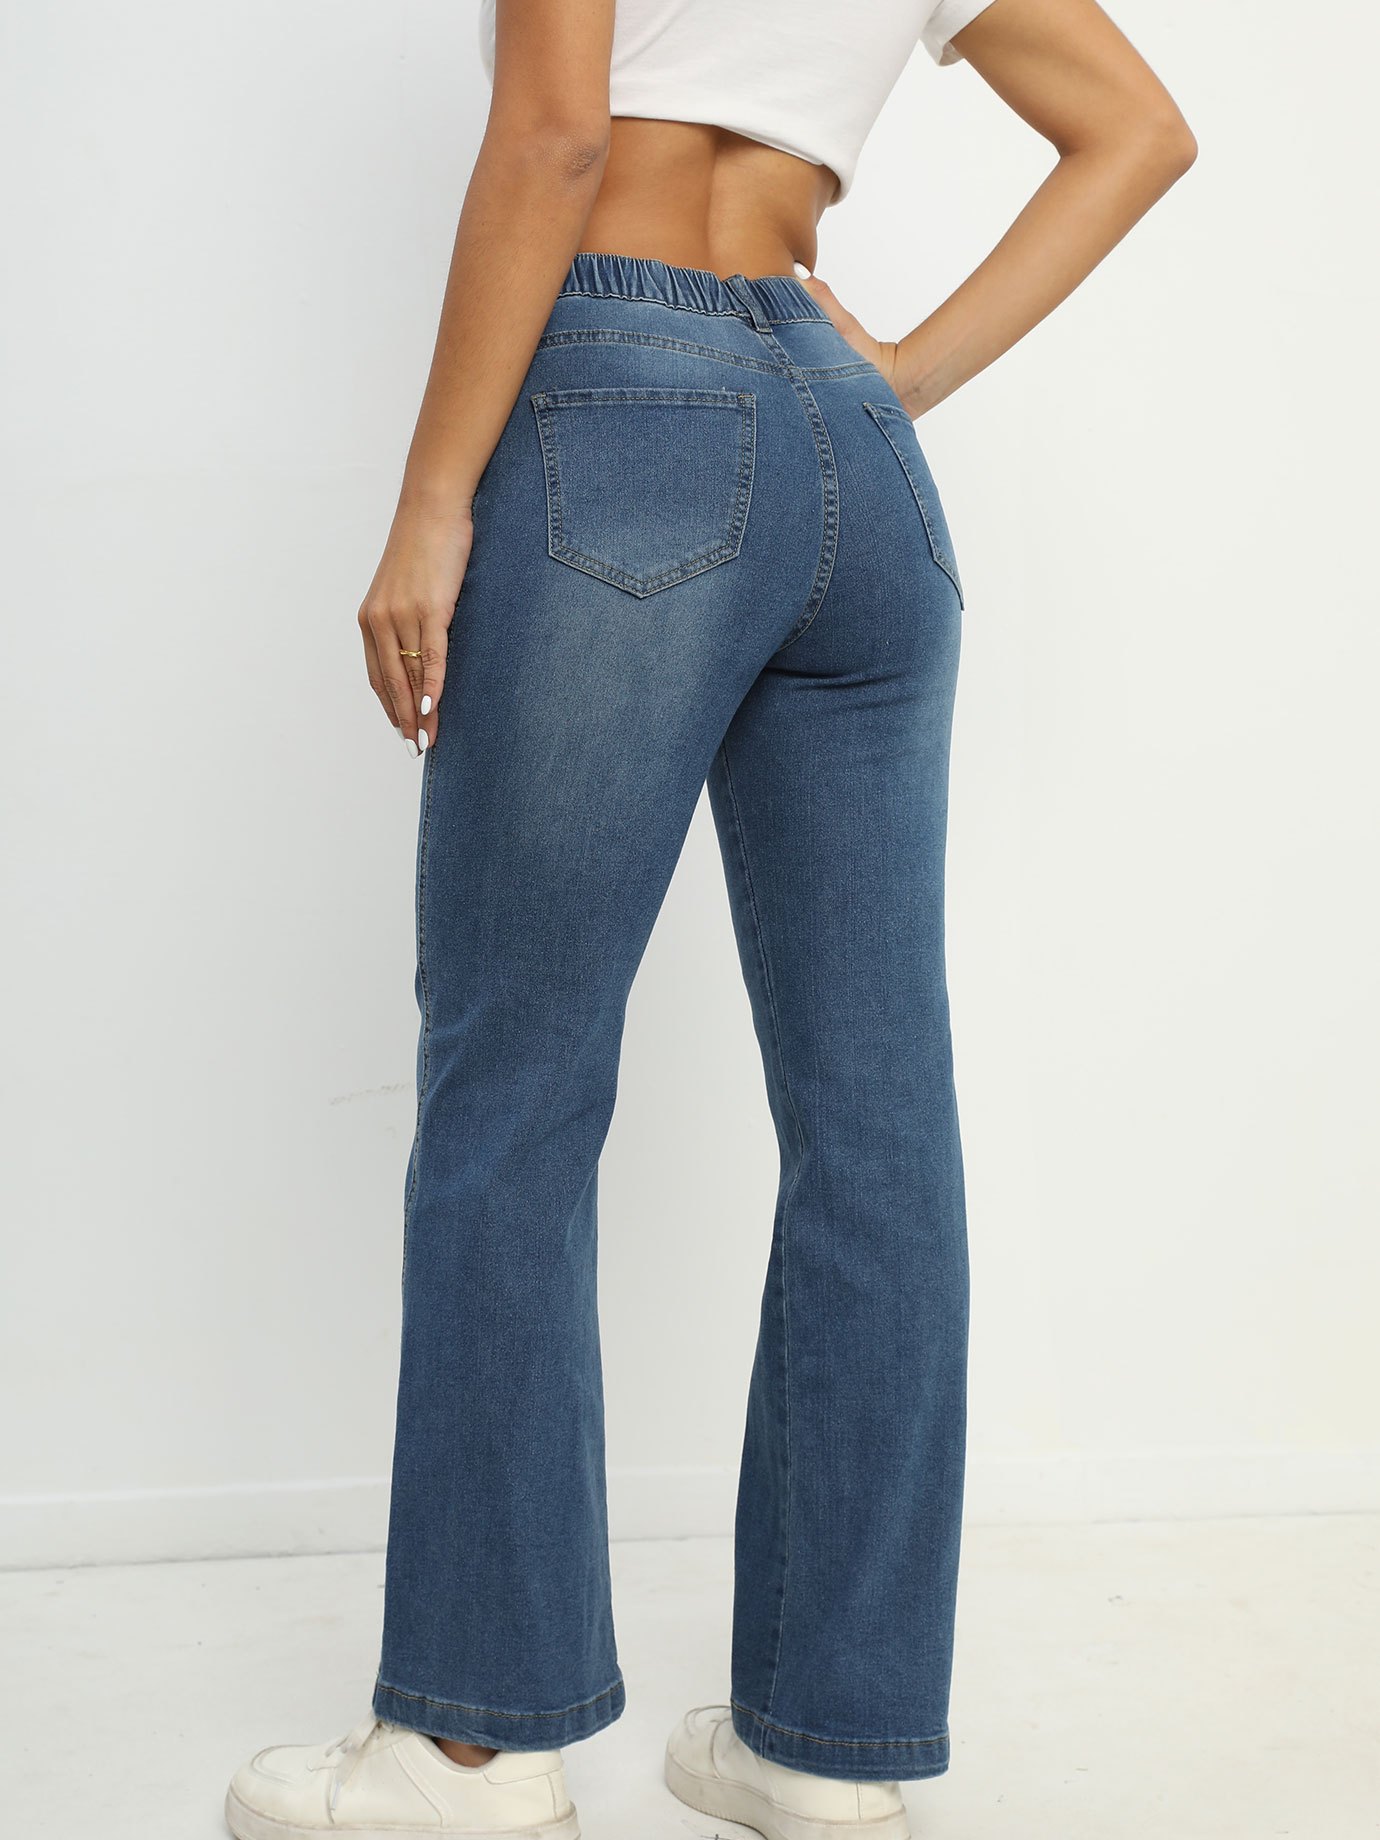 elastic waist stretchy straight jeans loose fit slant pockets washed denim pants womens denim jeans clothing